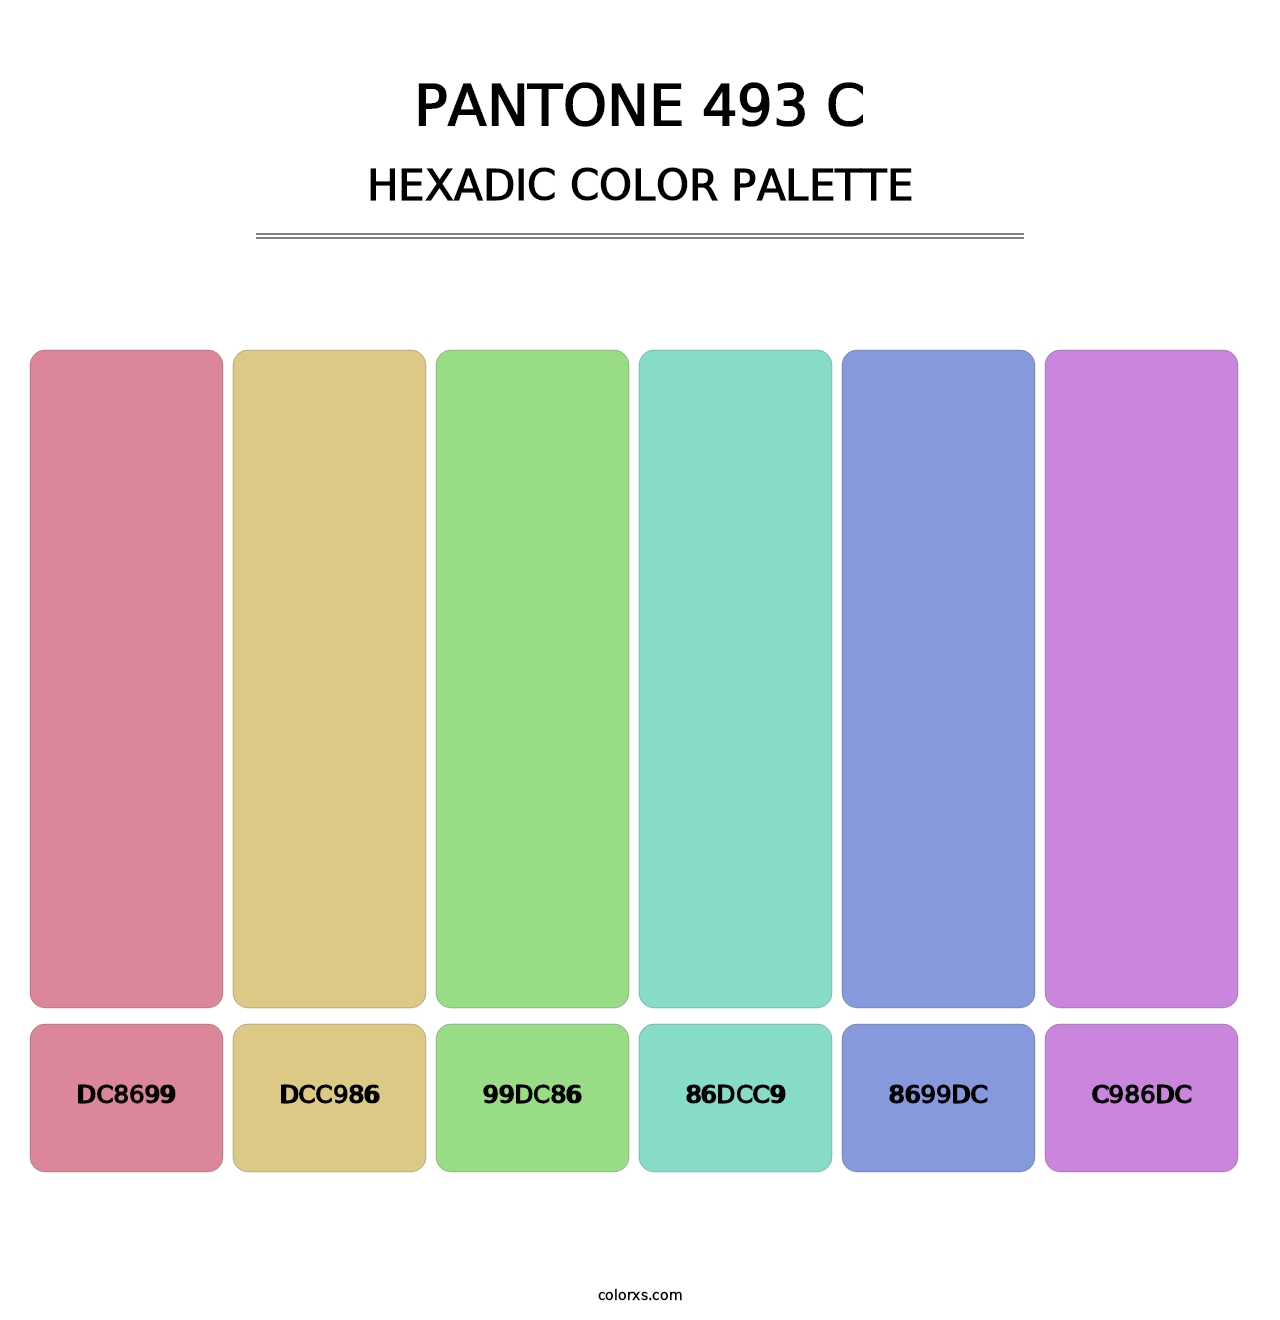 PANTONE 493 C - Hexadic Color Palette